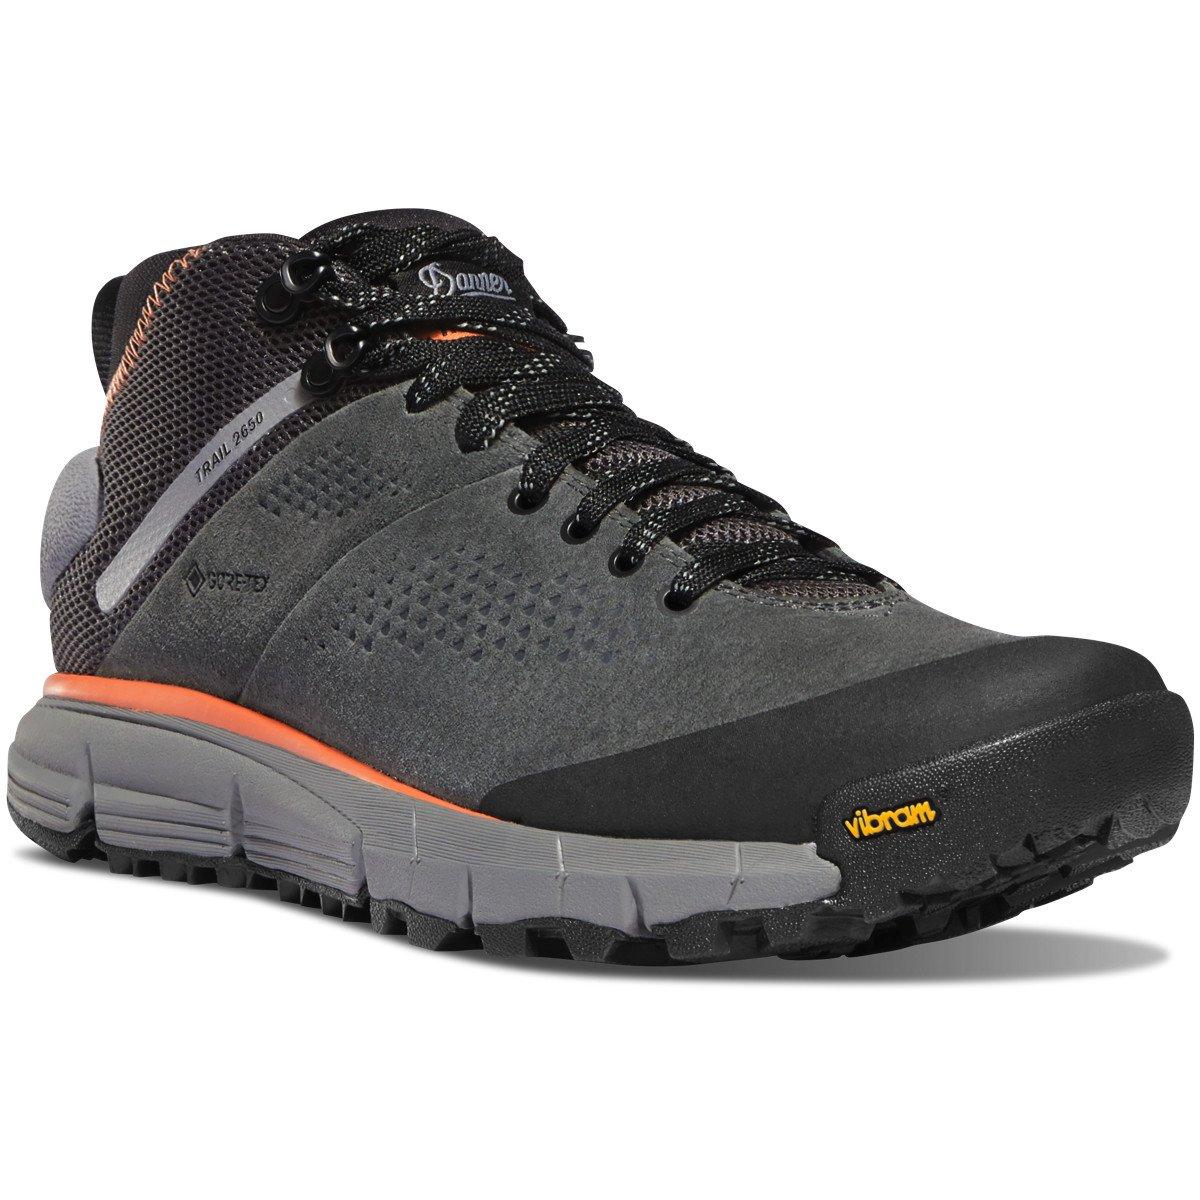 Danner Women's Trail 2650 Mid GTX Boots - Grey